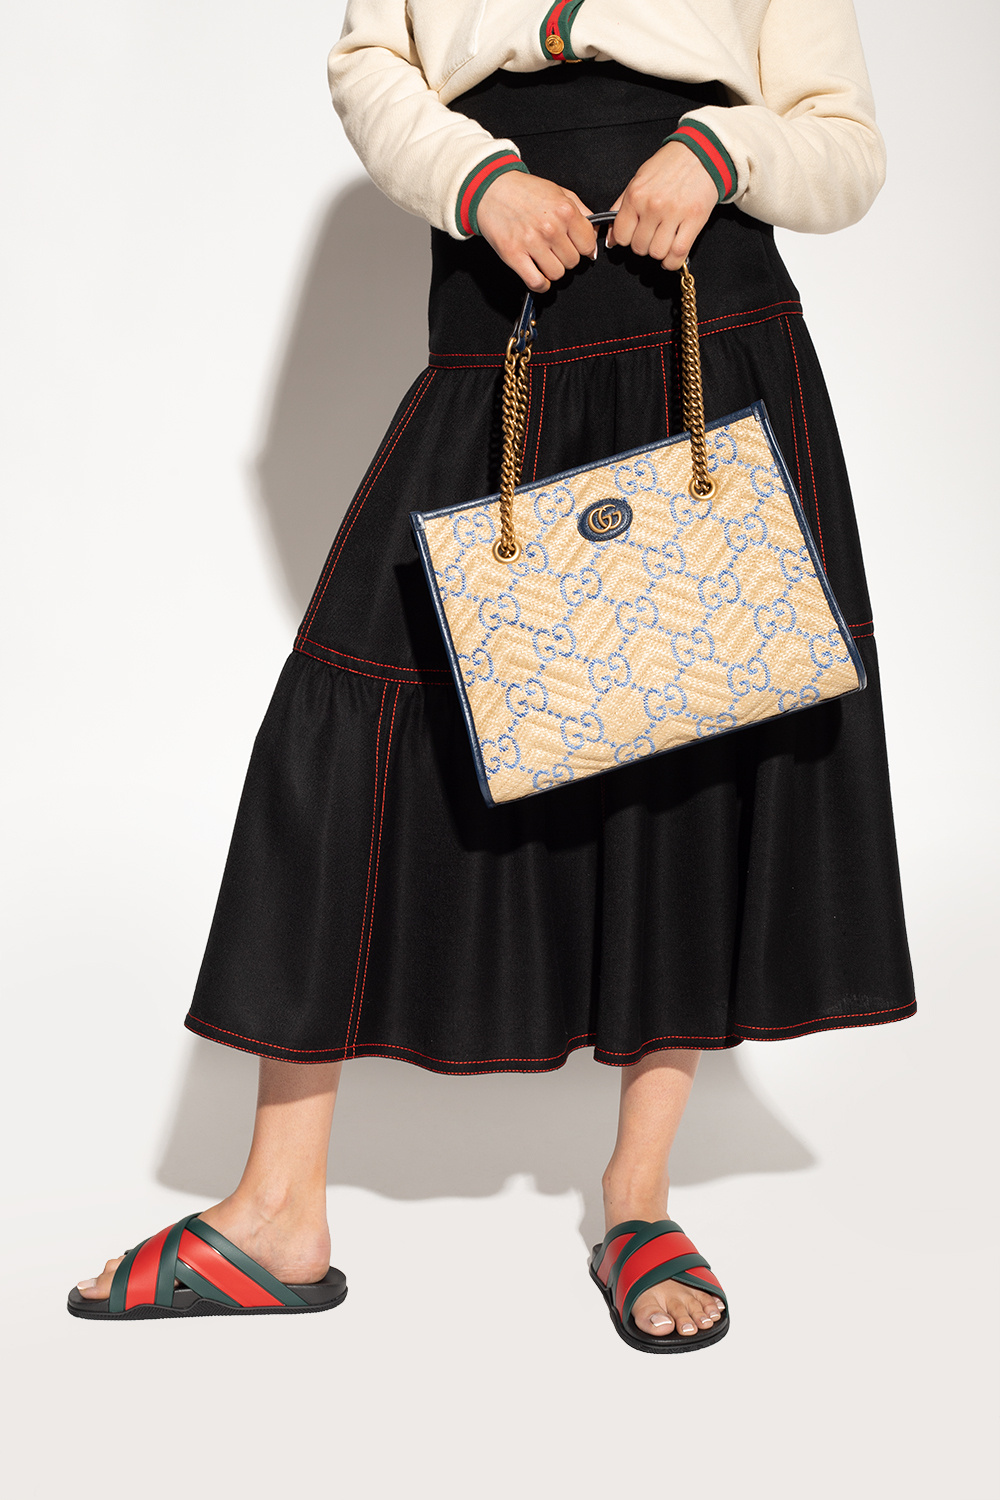 Gucci ‘Marmont’ shopper bag